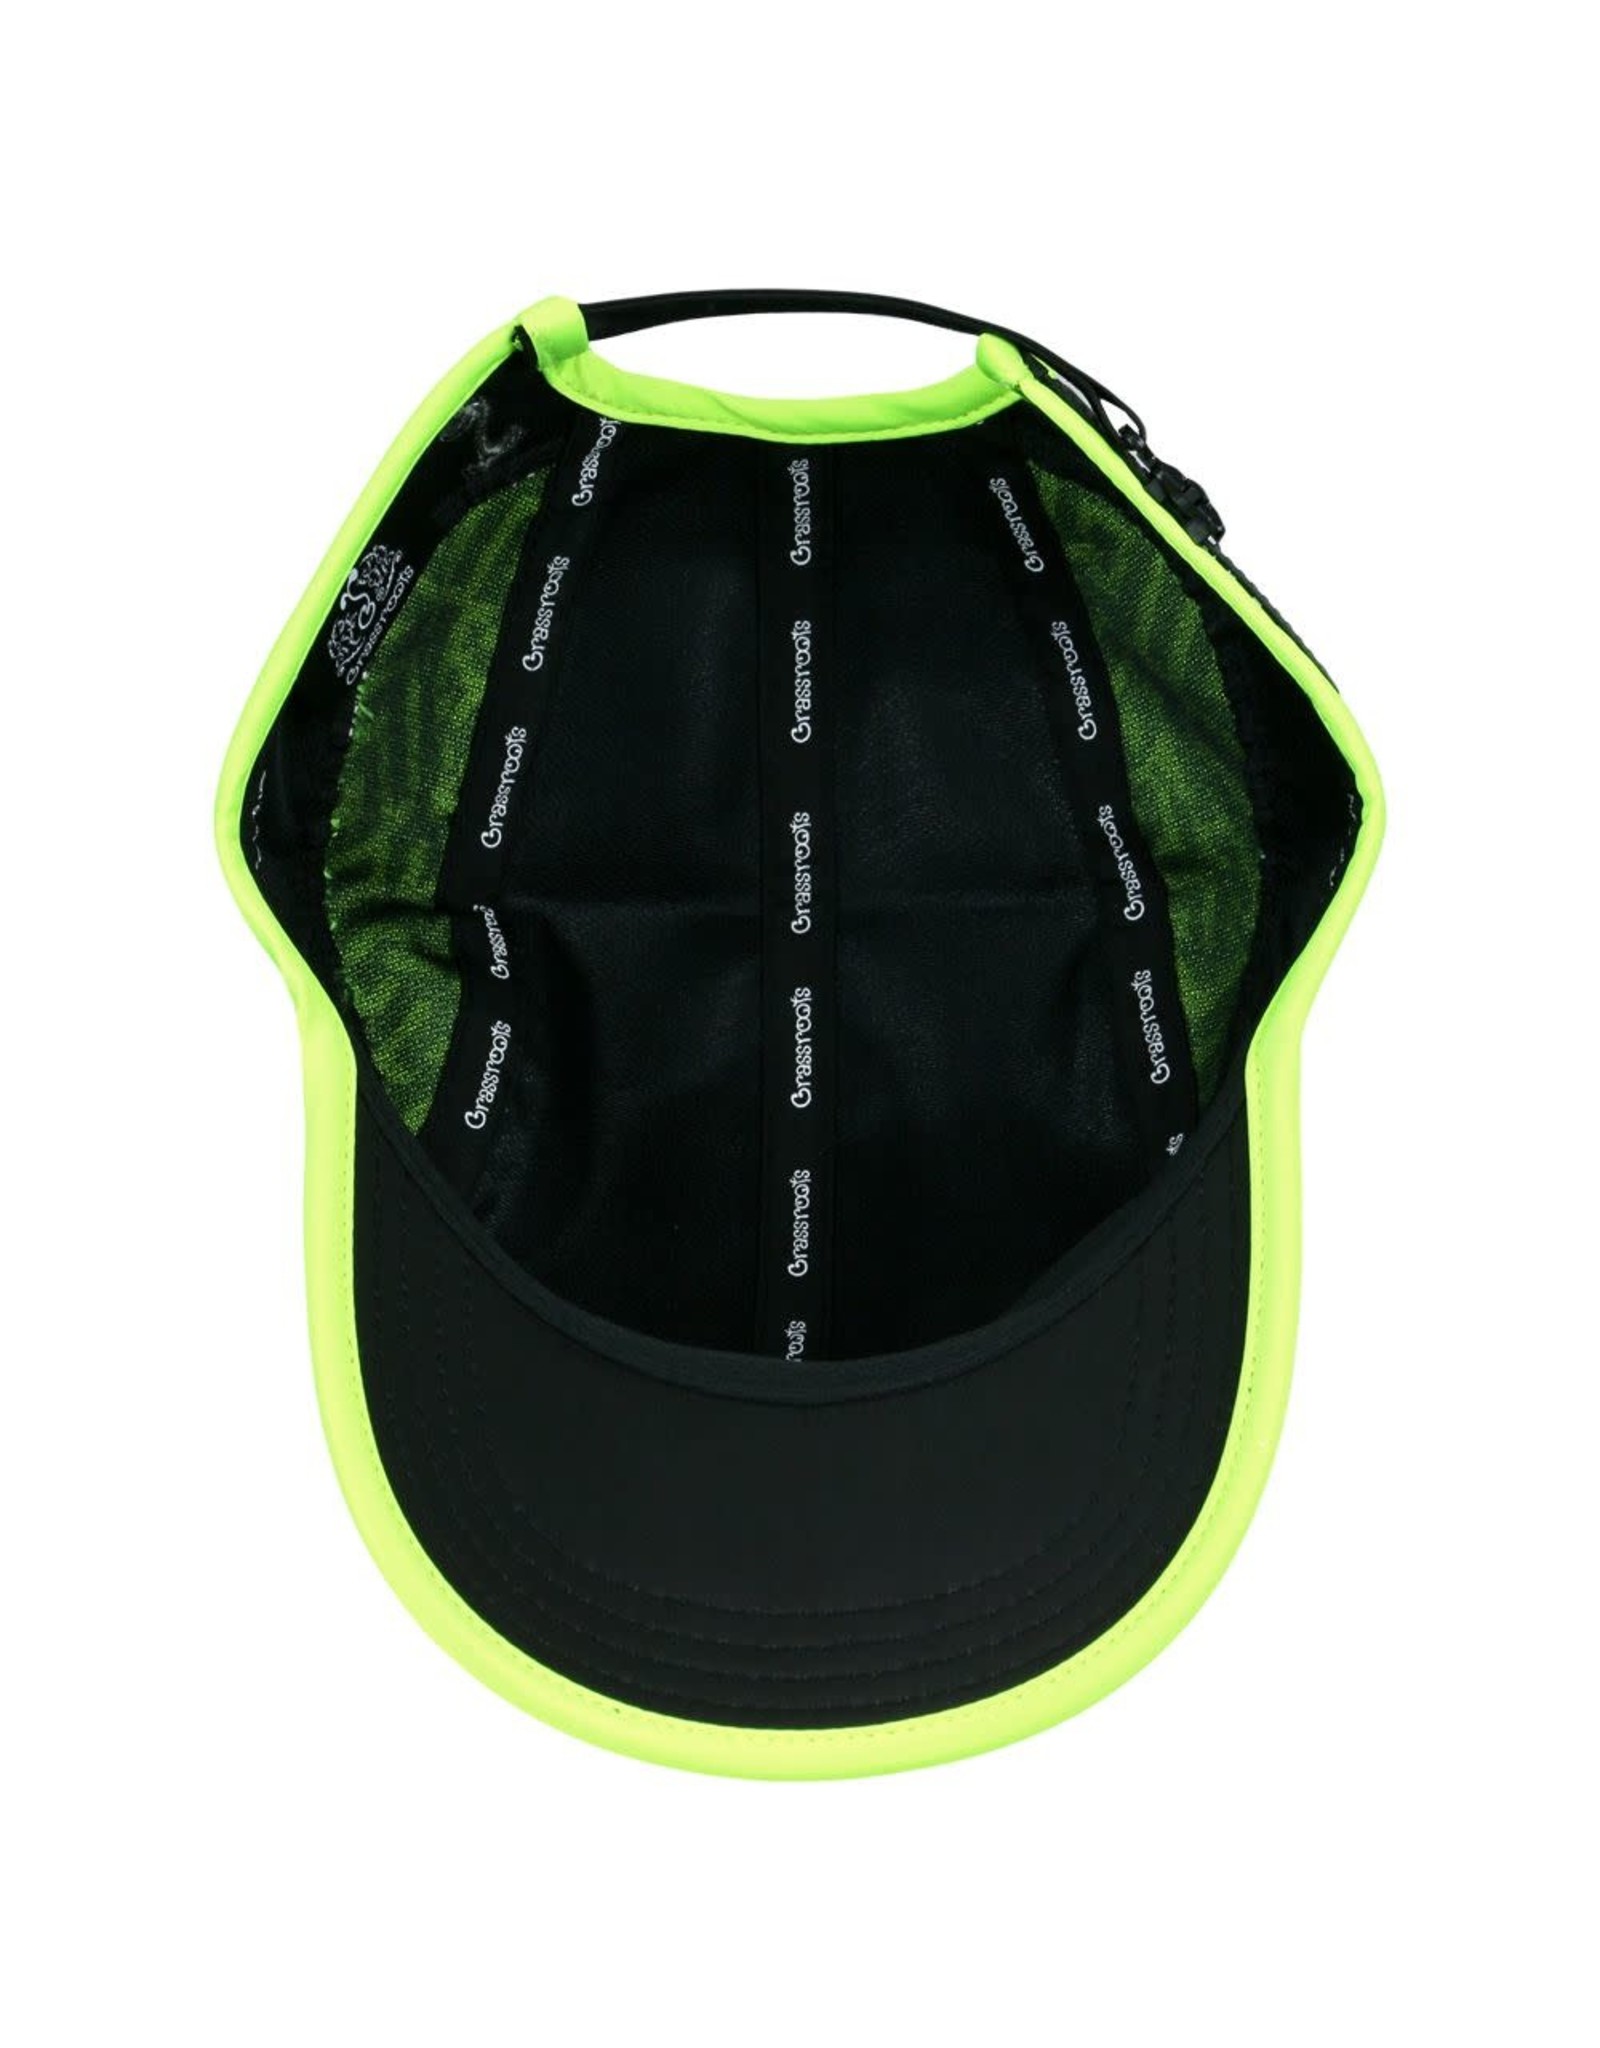 Neon Glitch Black 7 Panel Zipperback Hat